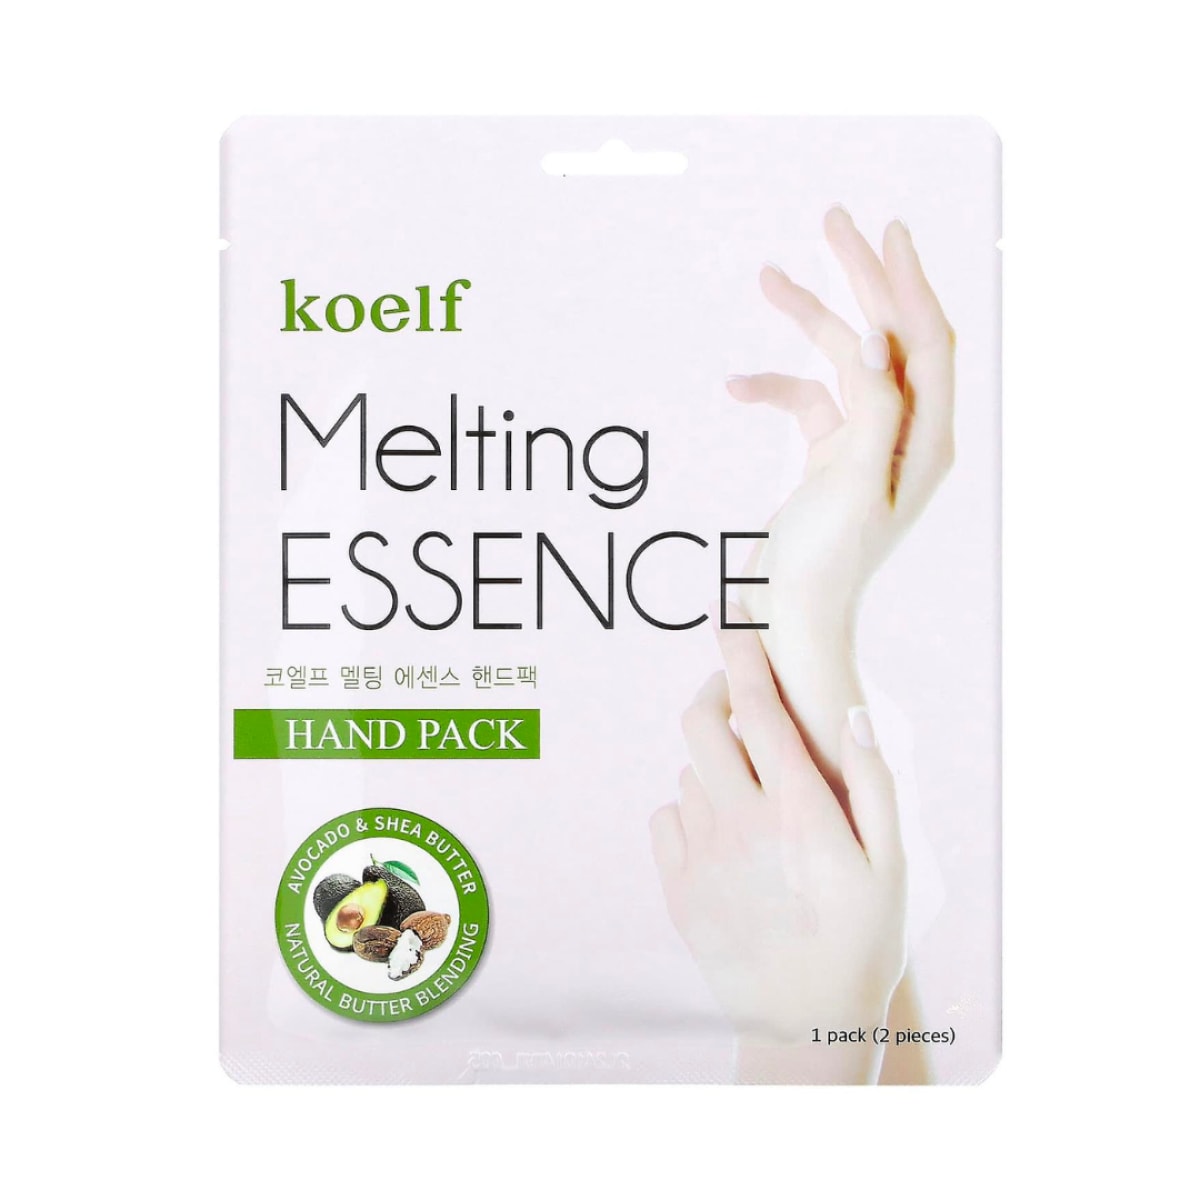 PETITFEE Koelf Melting Essence Hand Pack